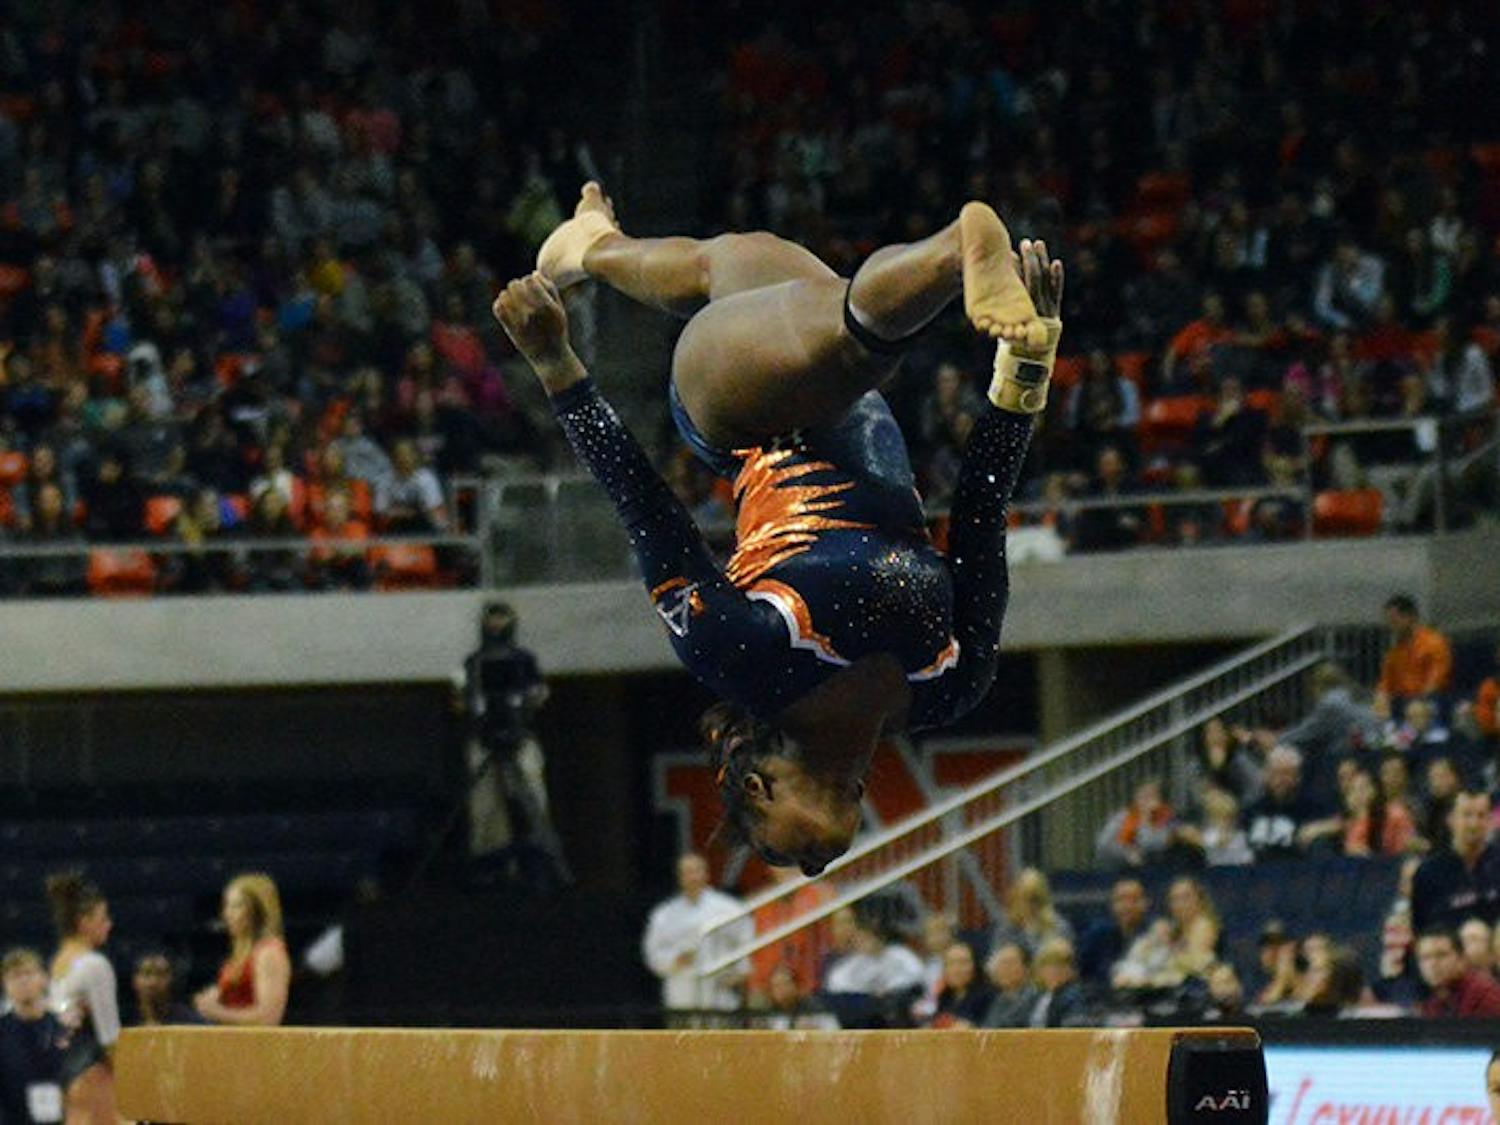 Bri Guy during her Beam routine. Auburn Gymnastics vs Arkansas in Auburn, AL on Jan 23, 2015. Emily Enfinger | PHOTO EDITOR